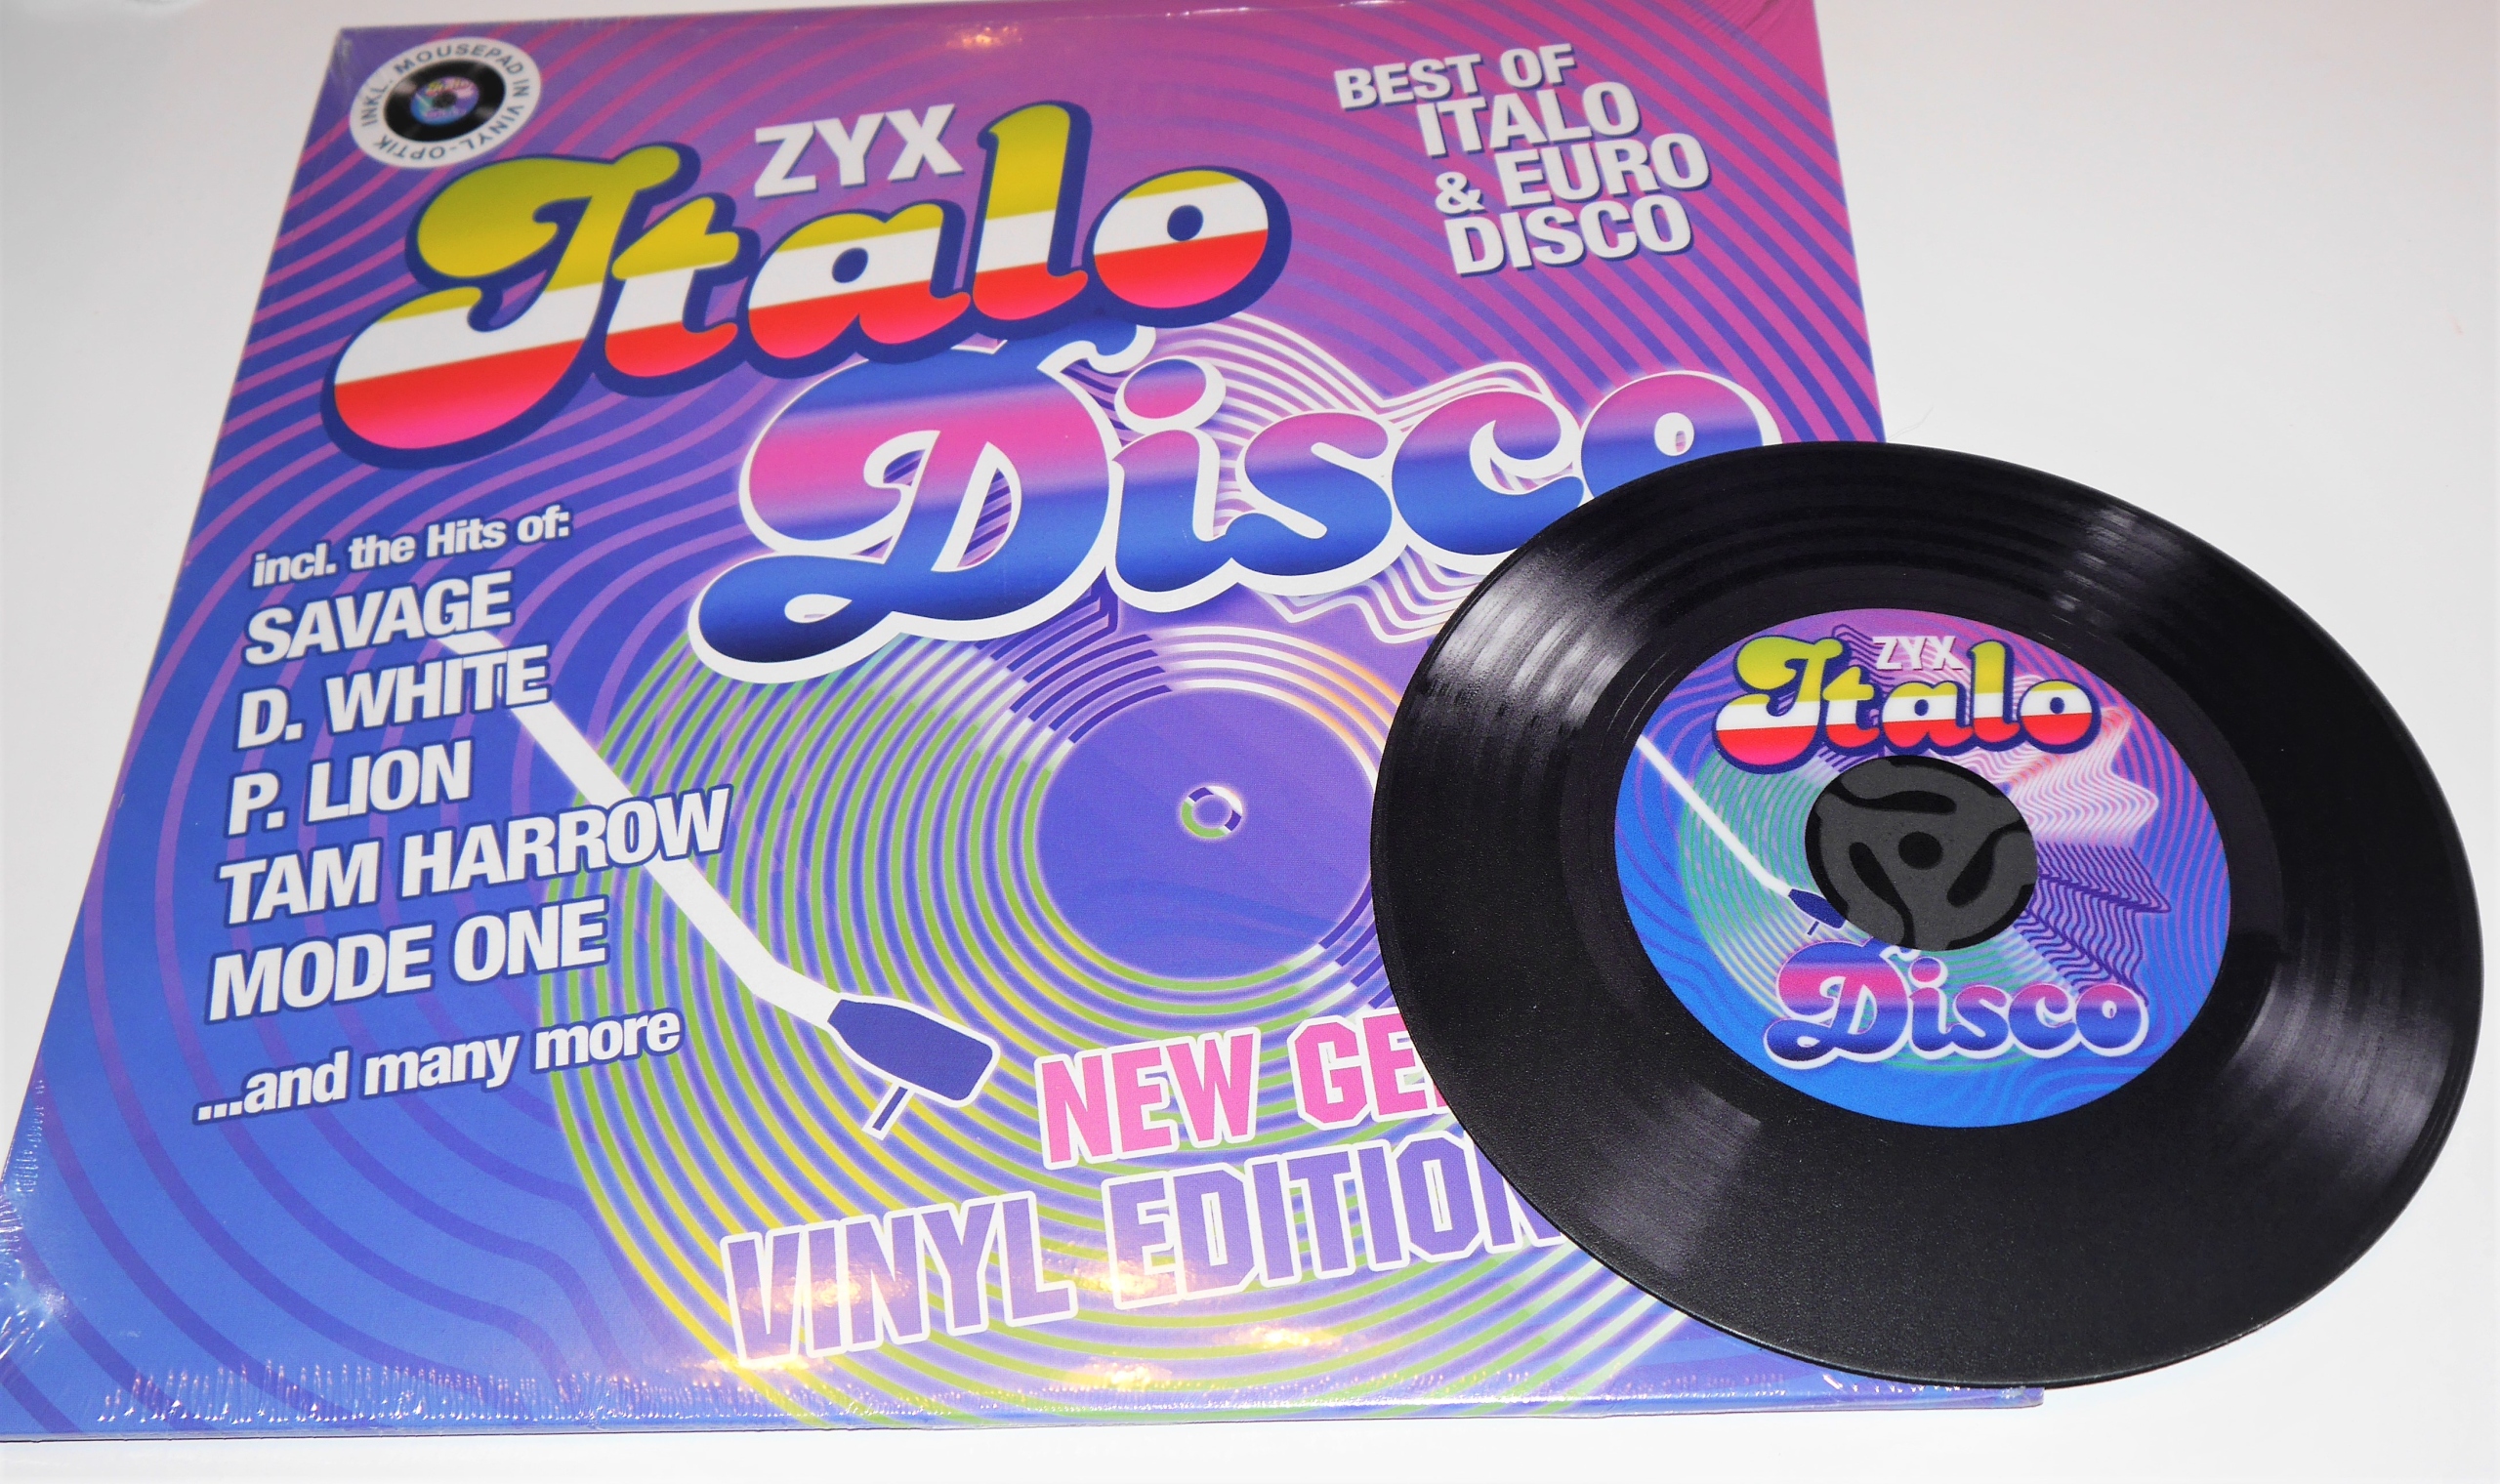 Zyx italo disco vol 24 new generation